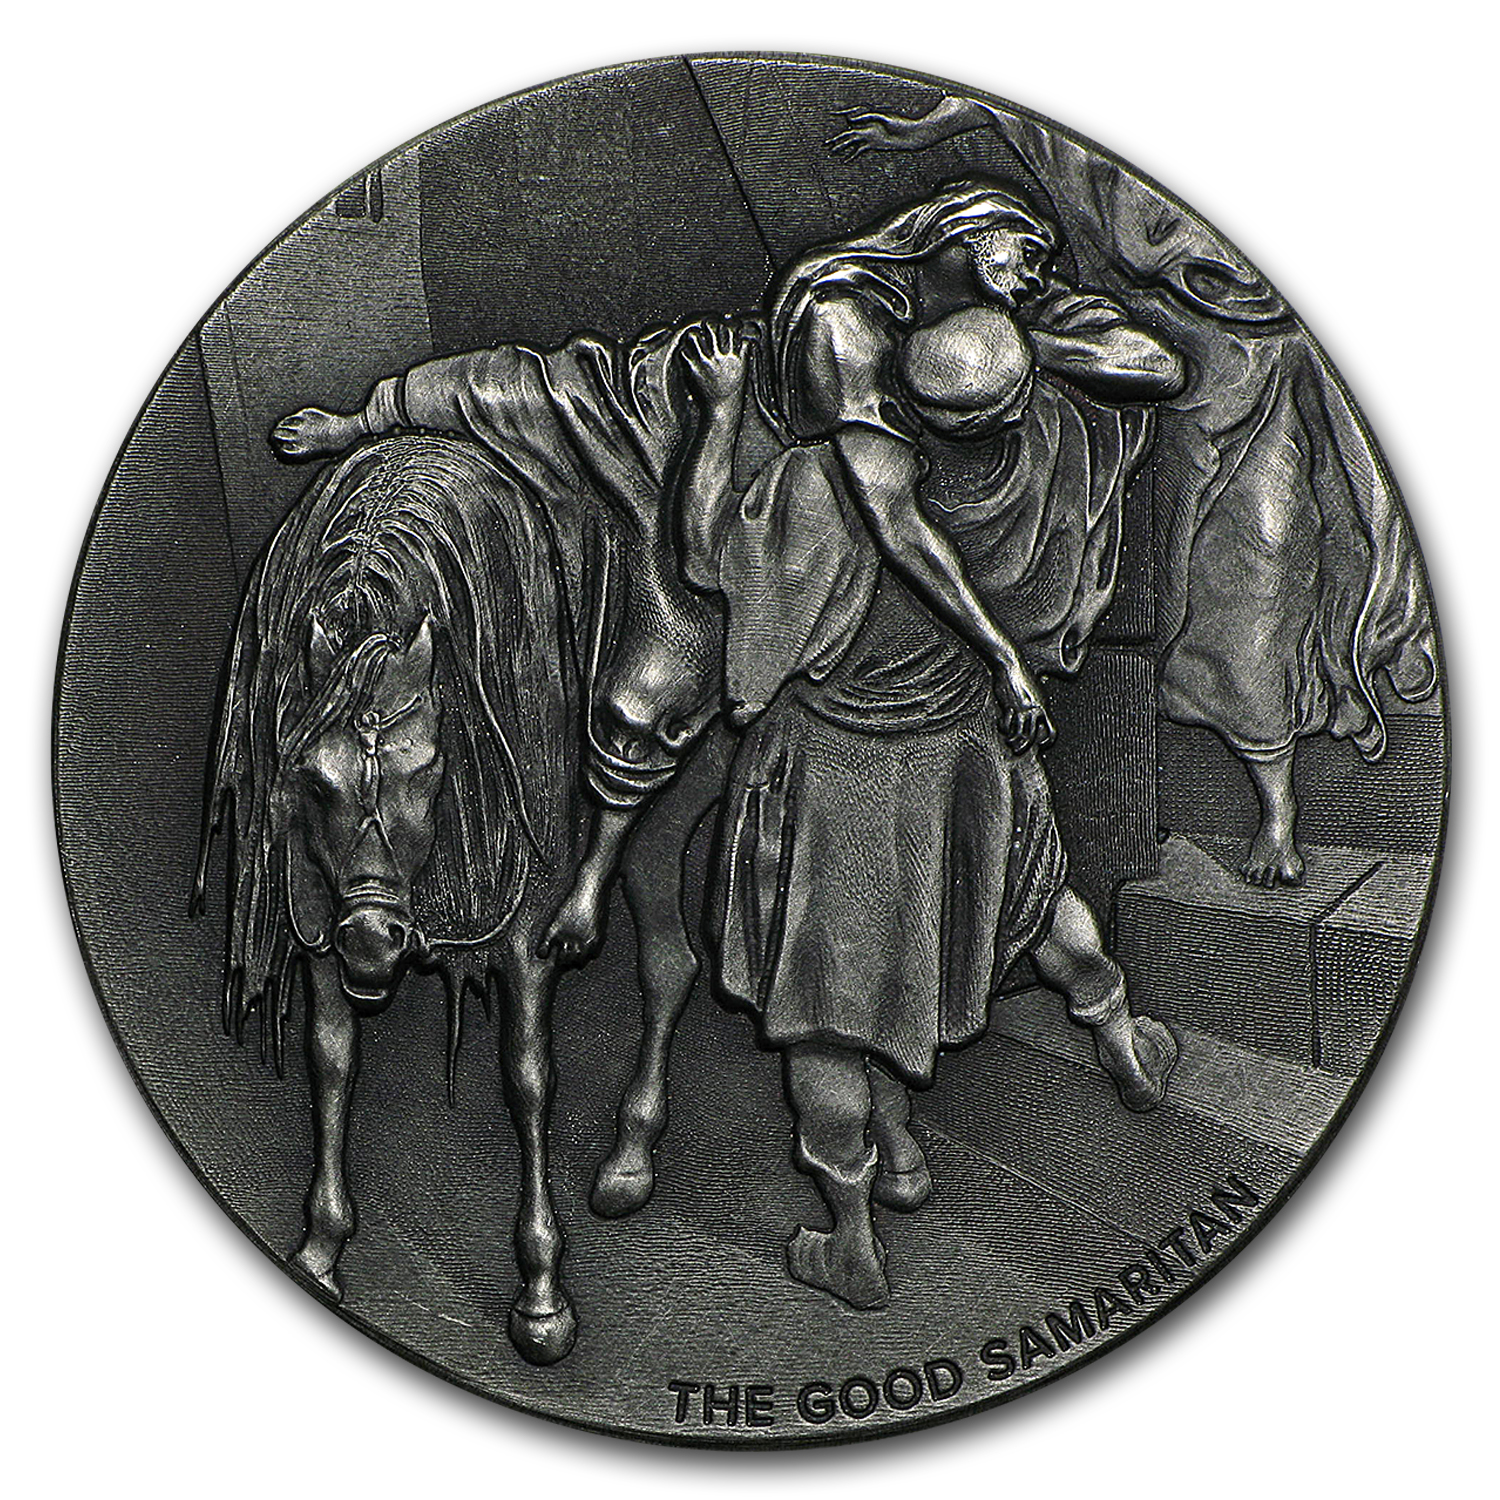 Buy 2016 2 oz Silver Coin - Biblical Series (The Good Samaritan)